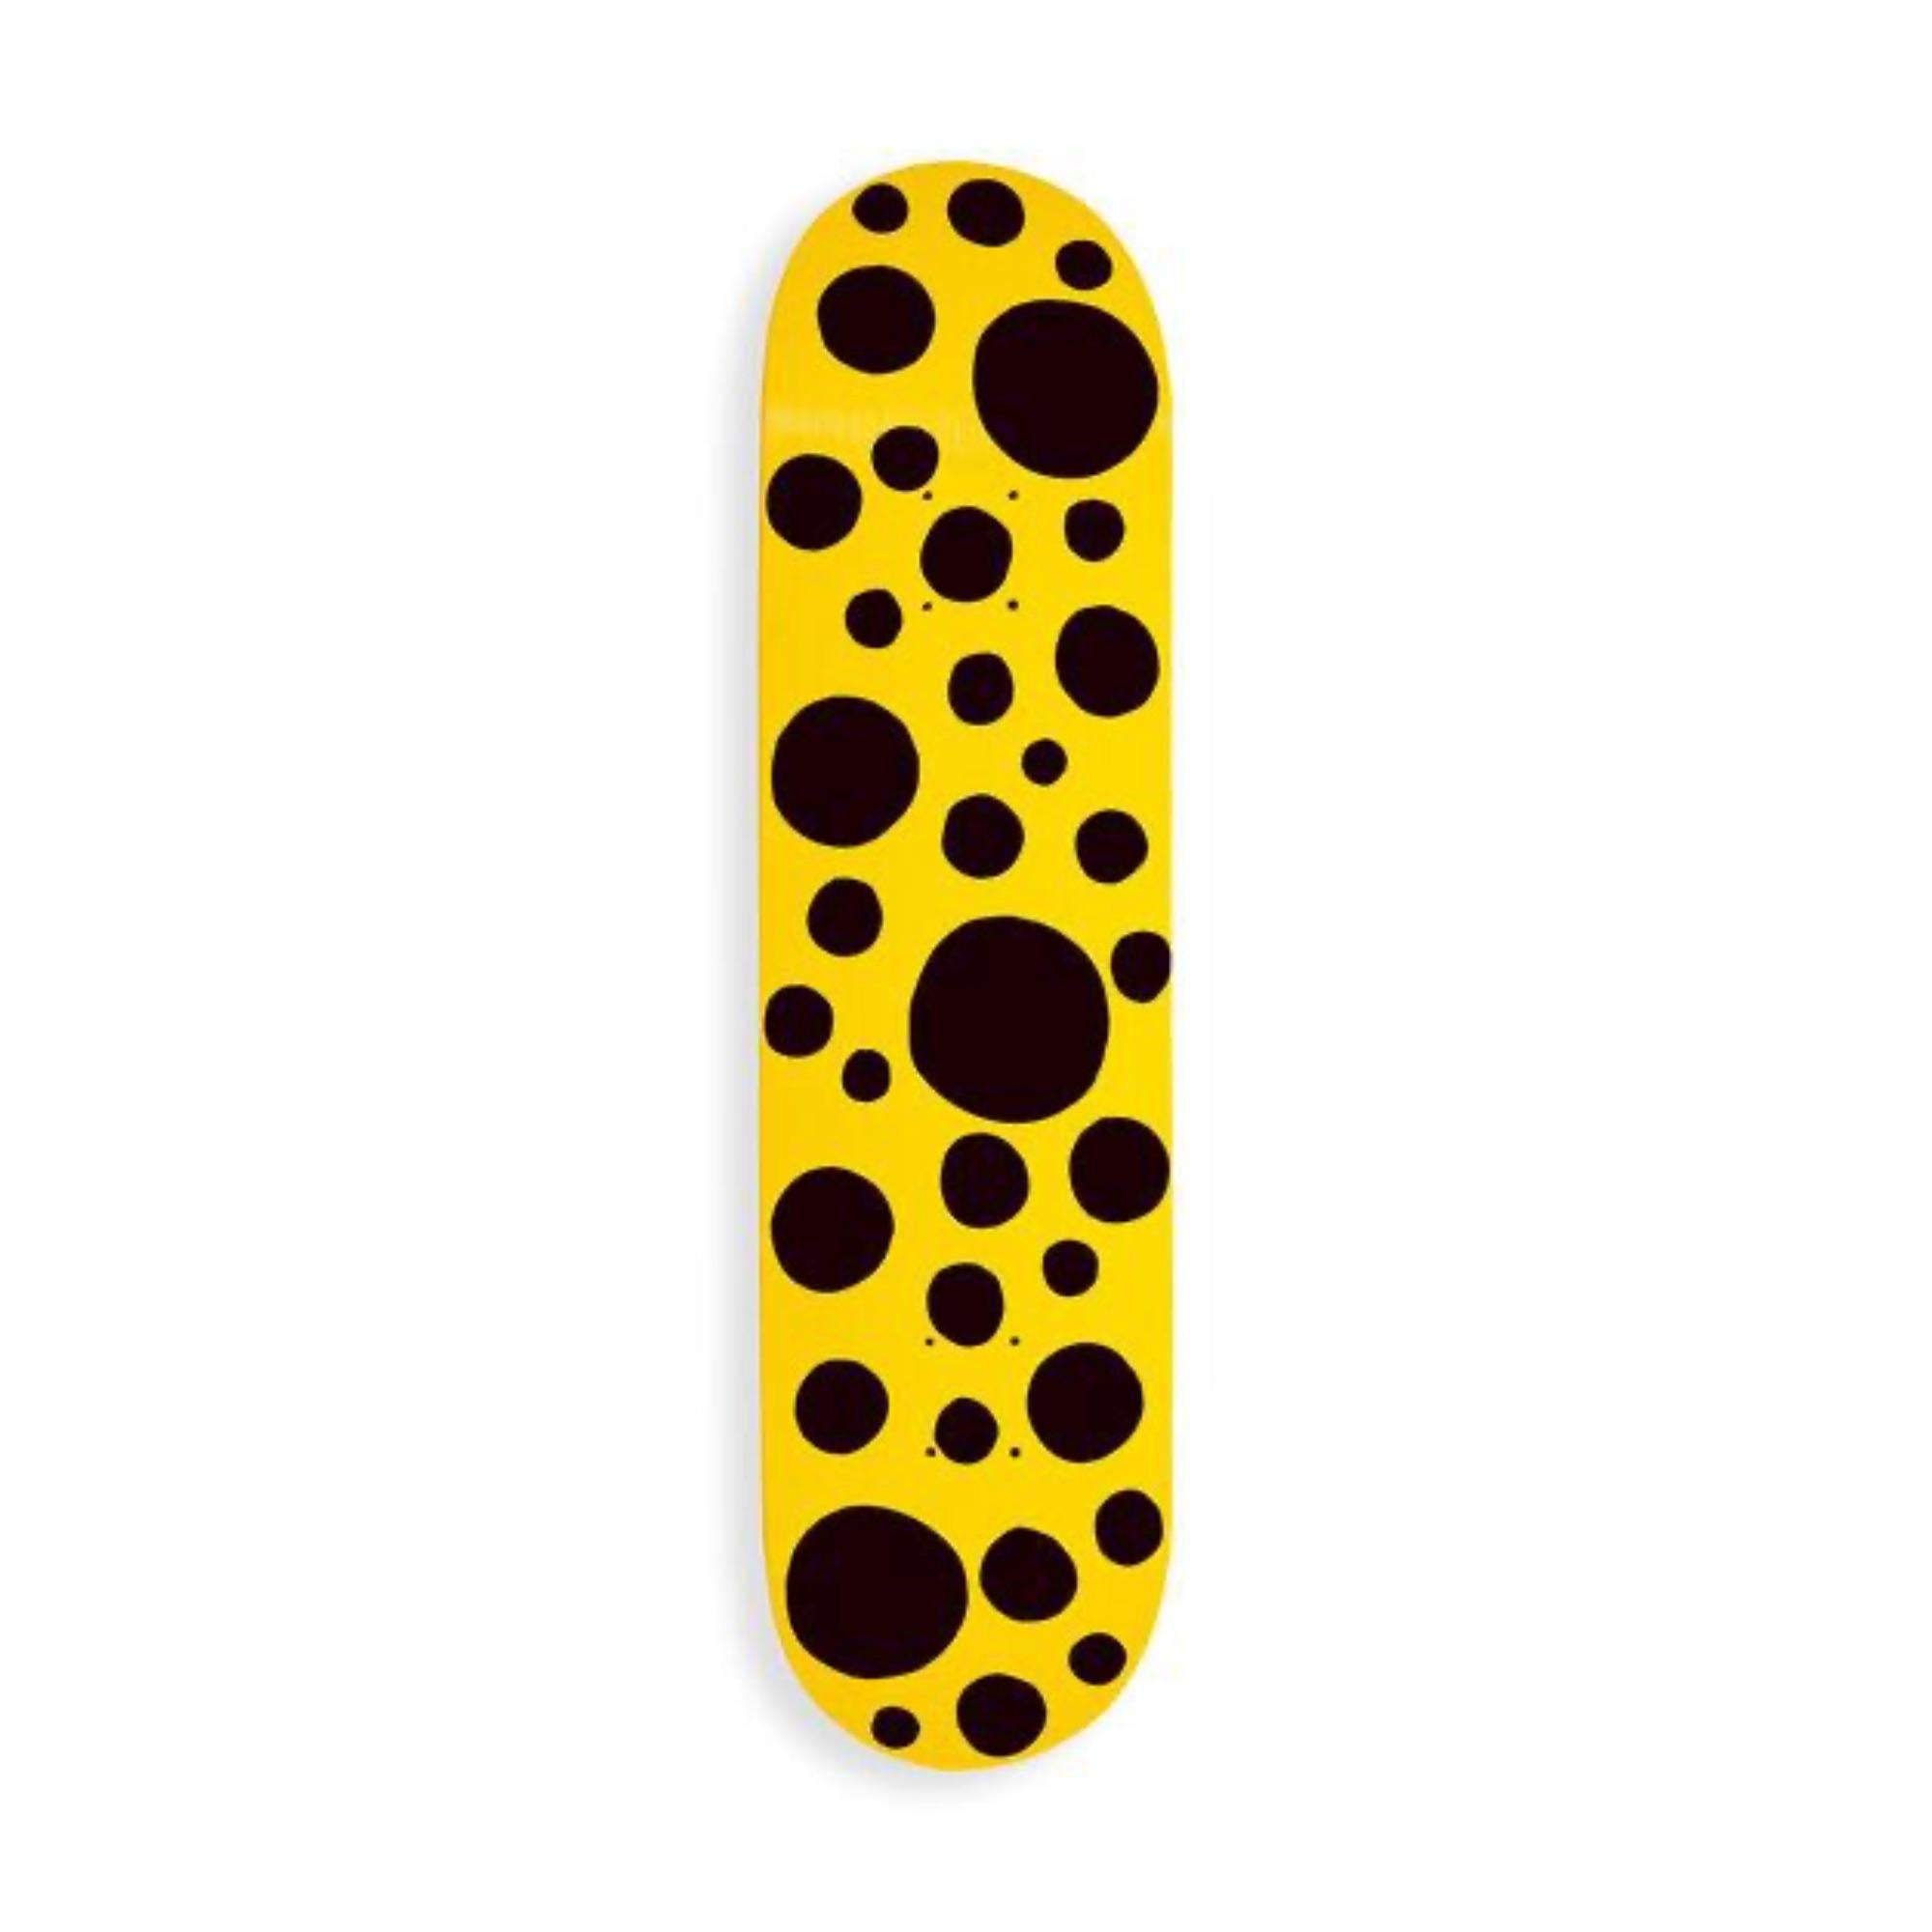 Yayoi Kusama Figurative Sculpture - Big Black Dots Skateboard (Yellow & Black)